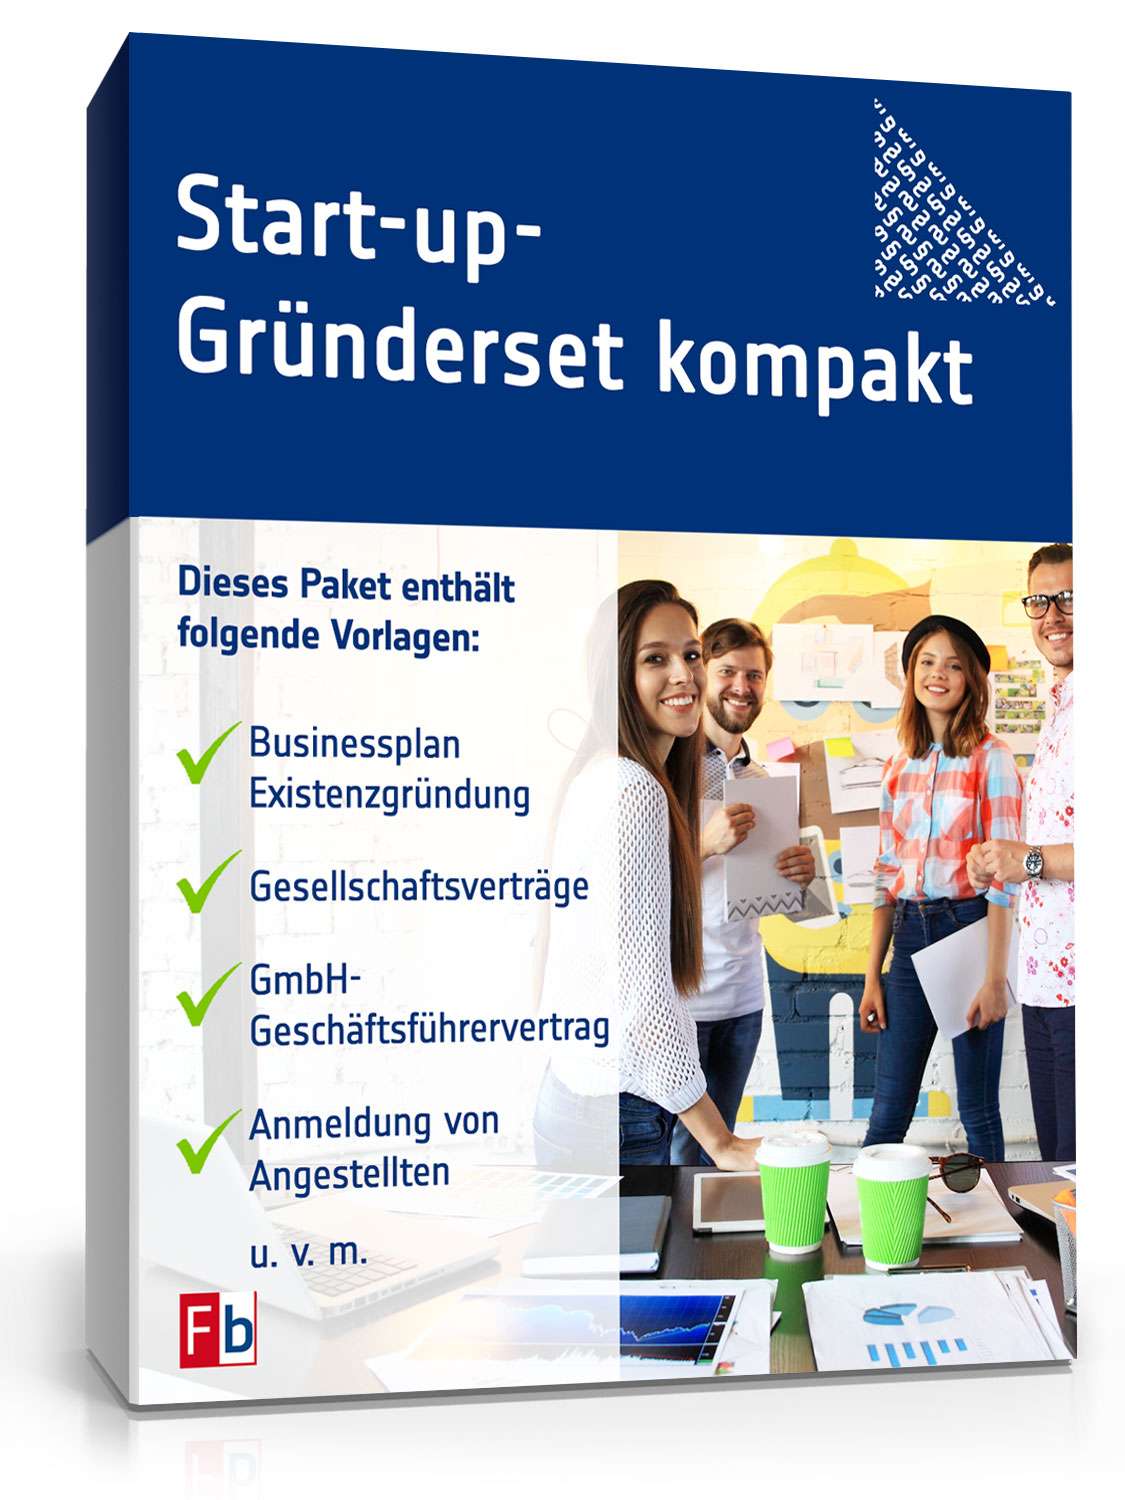 Hauptbild des Produkts: Start-up-Gründerset kompakt